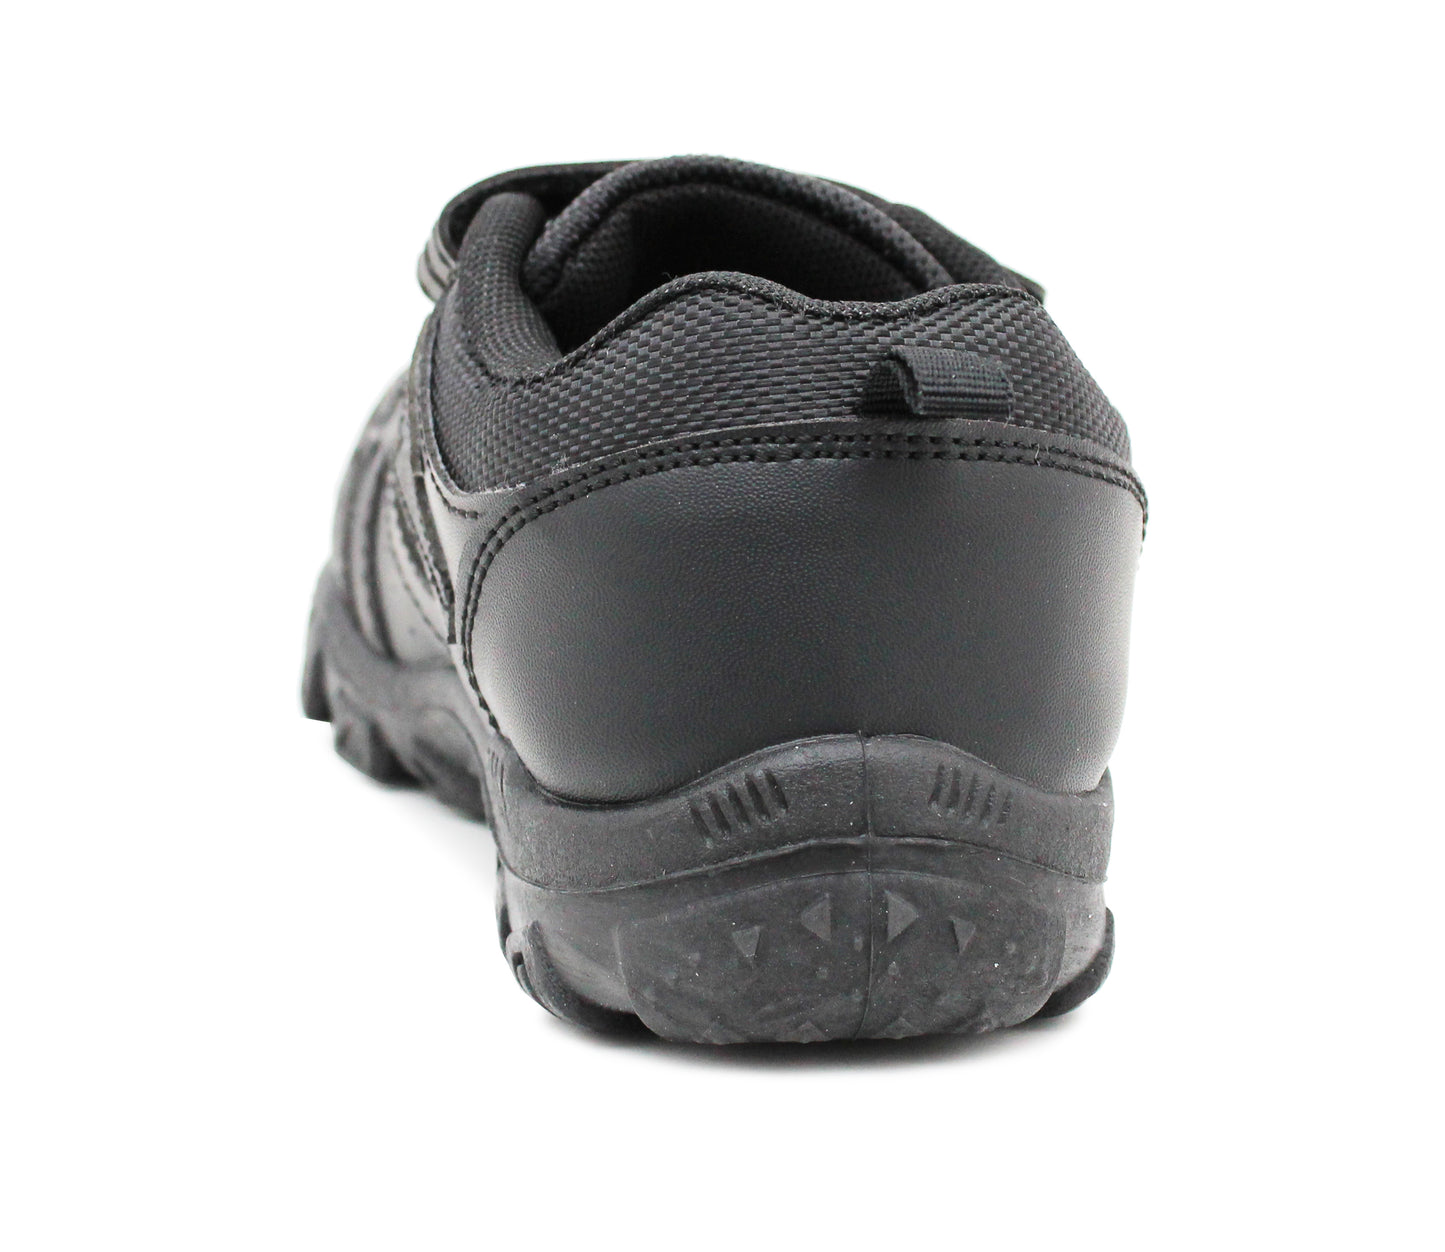 BOLT Boys Kids Black School Shoes Trainers Touch Fasten Casual Uniform Sneaker Pumps